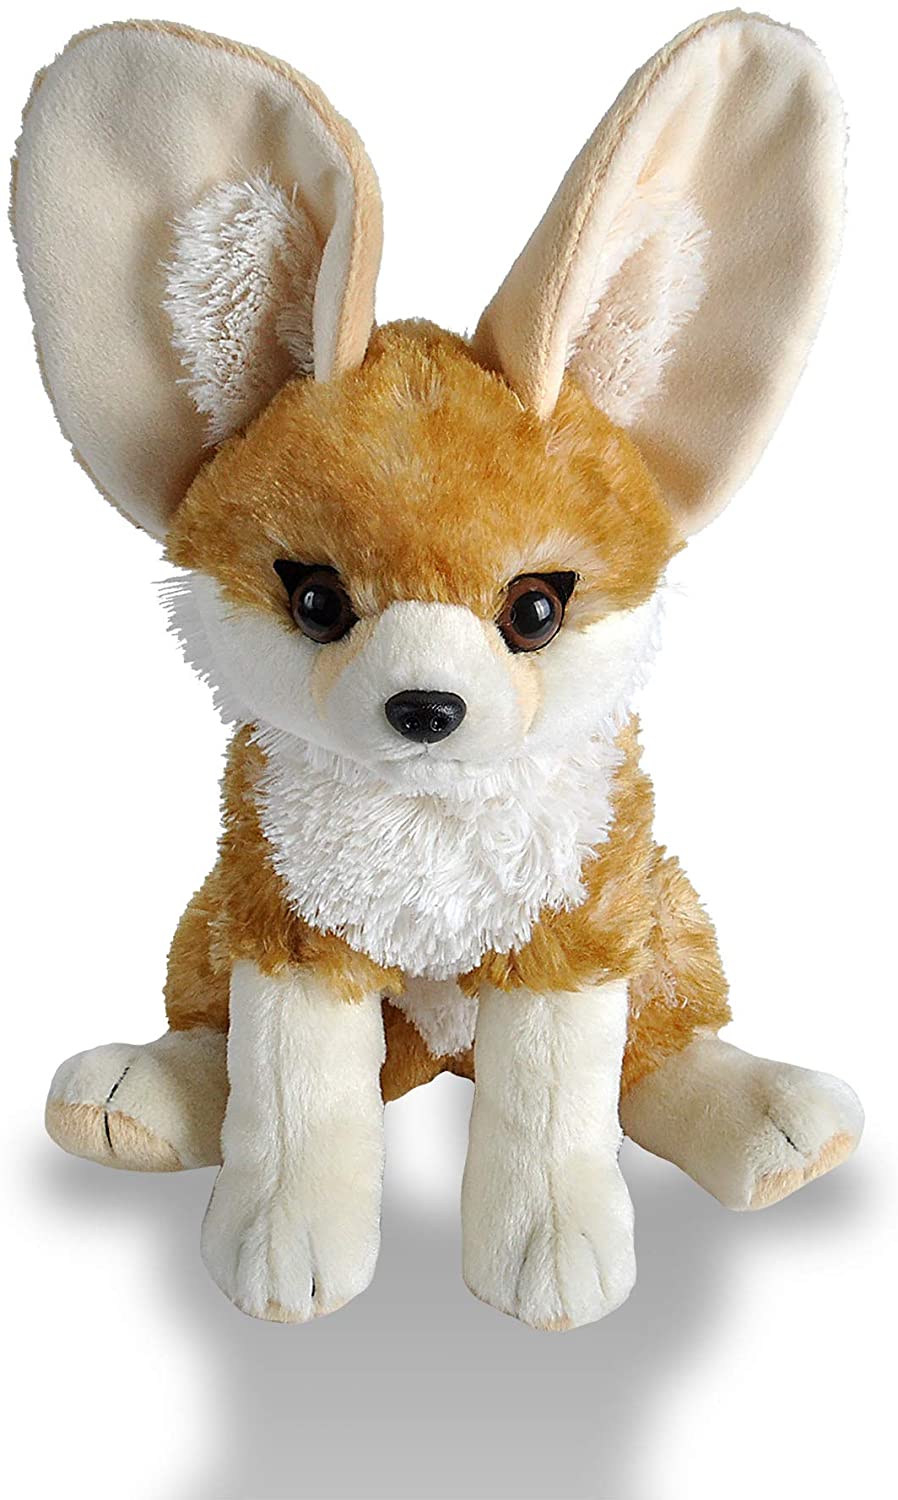 Cuddlekins Red Fox Plush Stuffed Animal by Wild Republic, Kid Gifts, Zoo  Animals, 12 inches